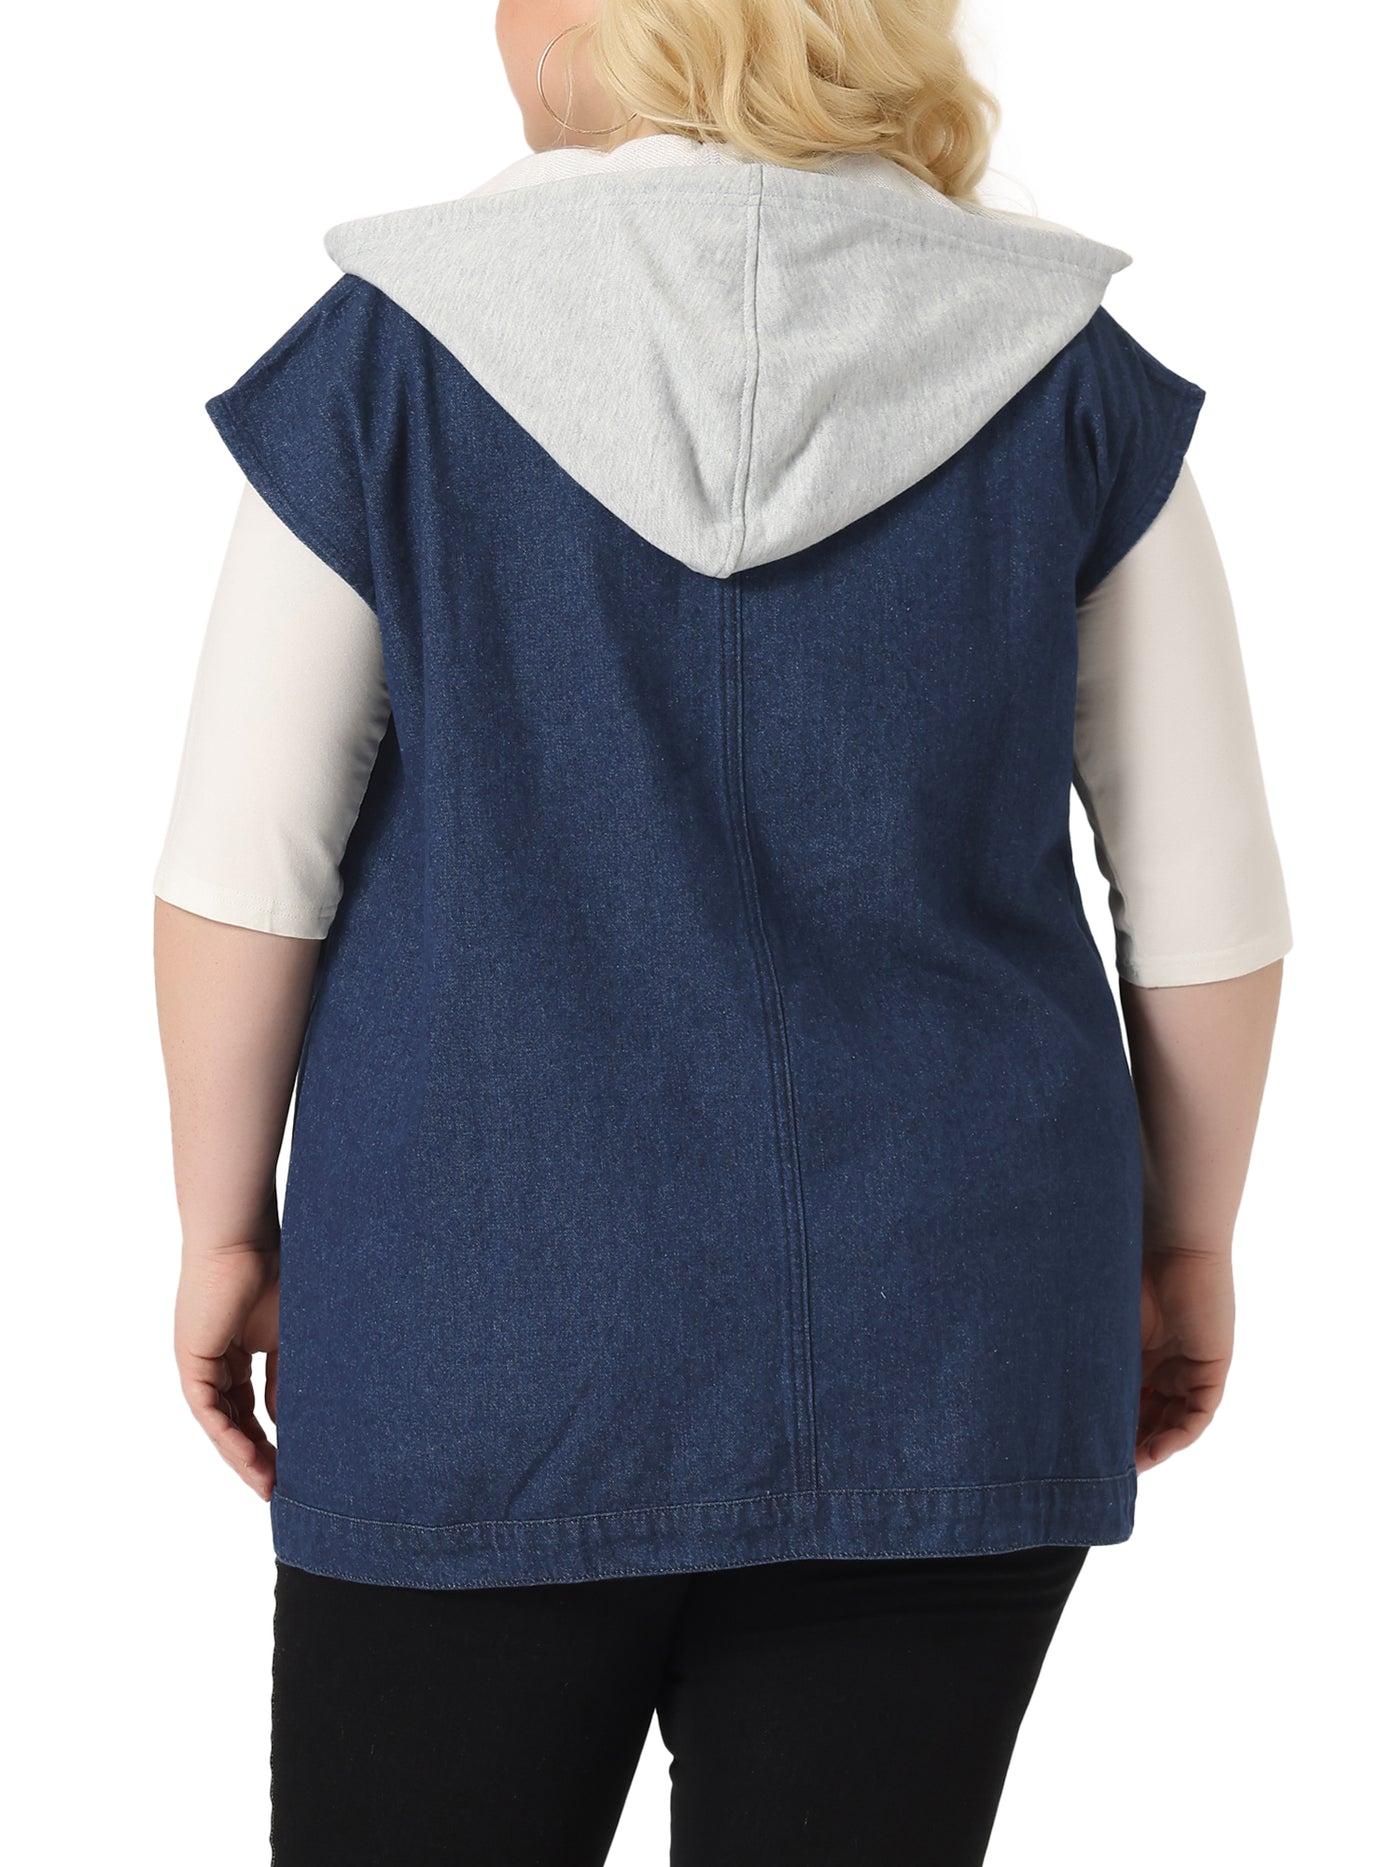 Bublédon Plus Size Denim Jackets for Women Drawstring Hood Utility Long Jean Jacket Vests